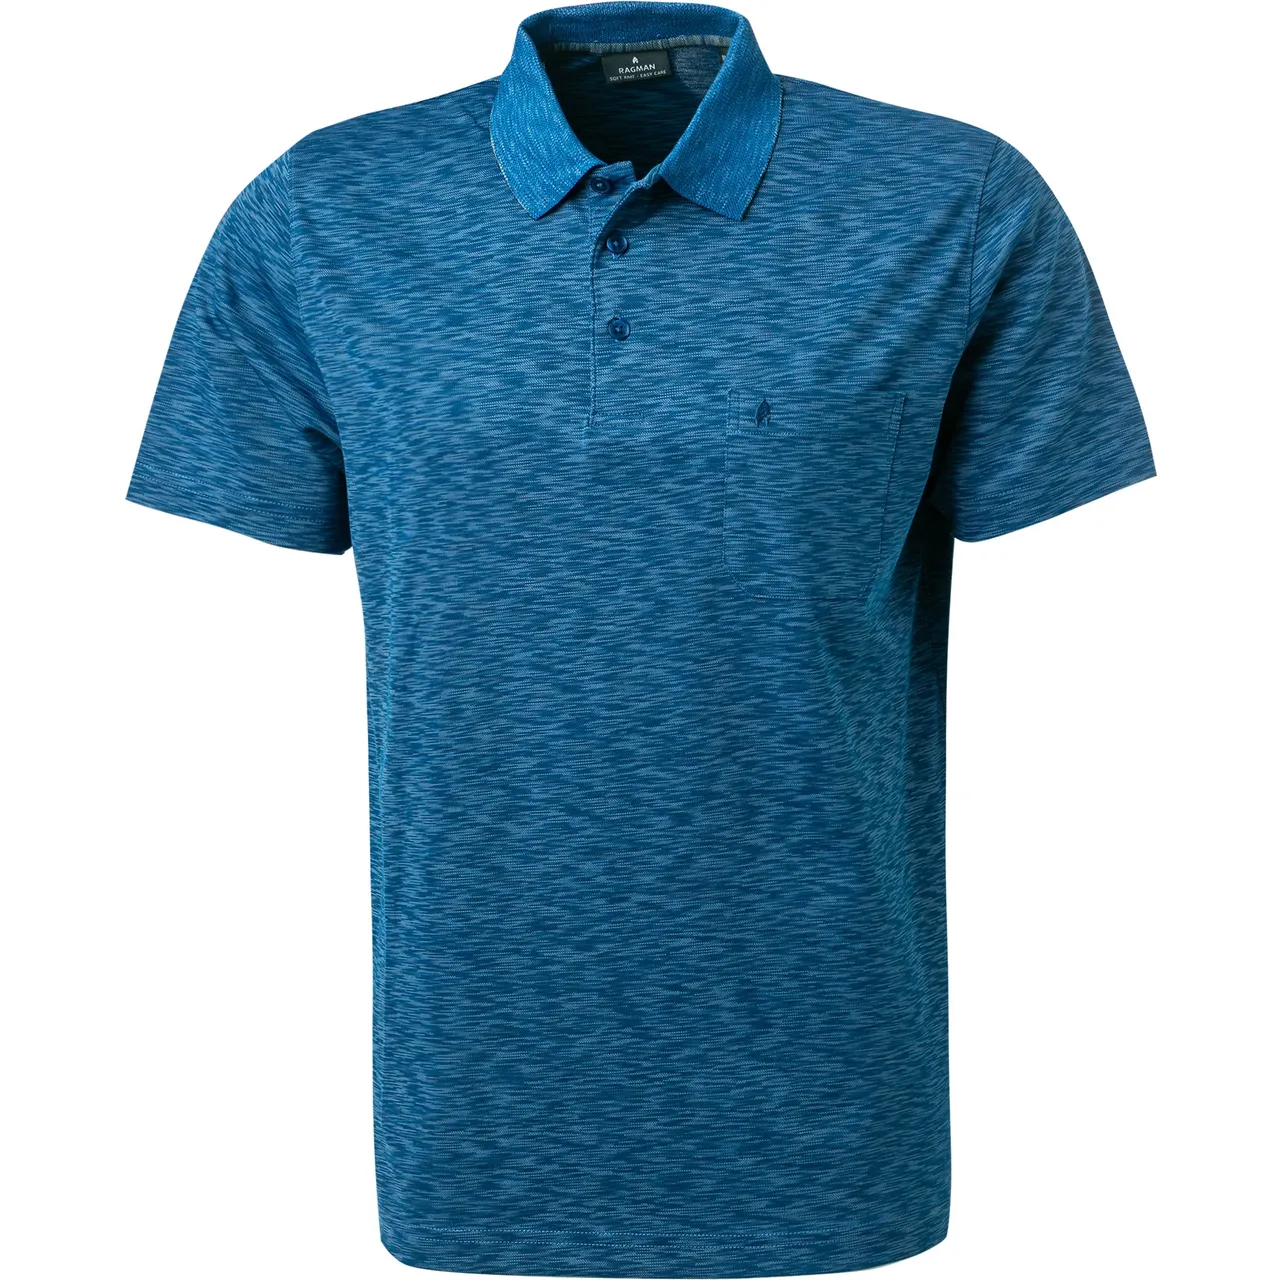 RAGMAN Herren Polo-Shirt blau Baumwoll-Jersey meliert